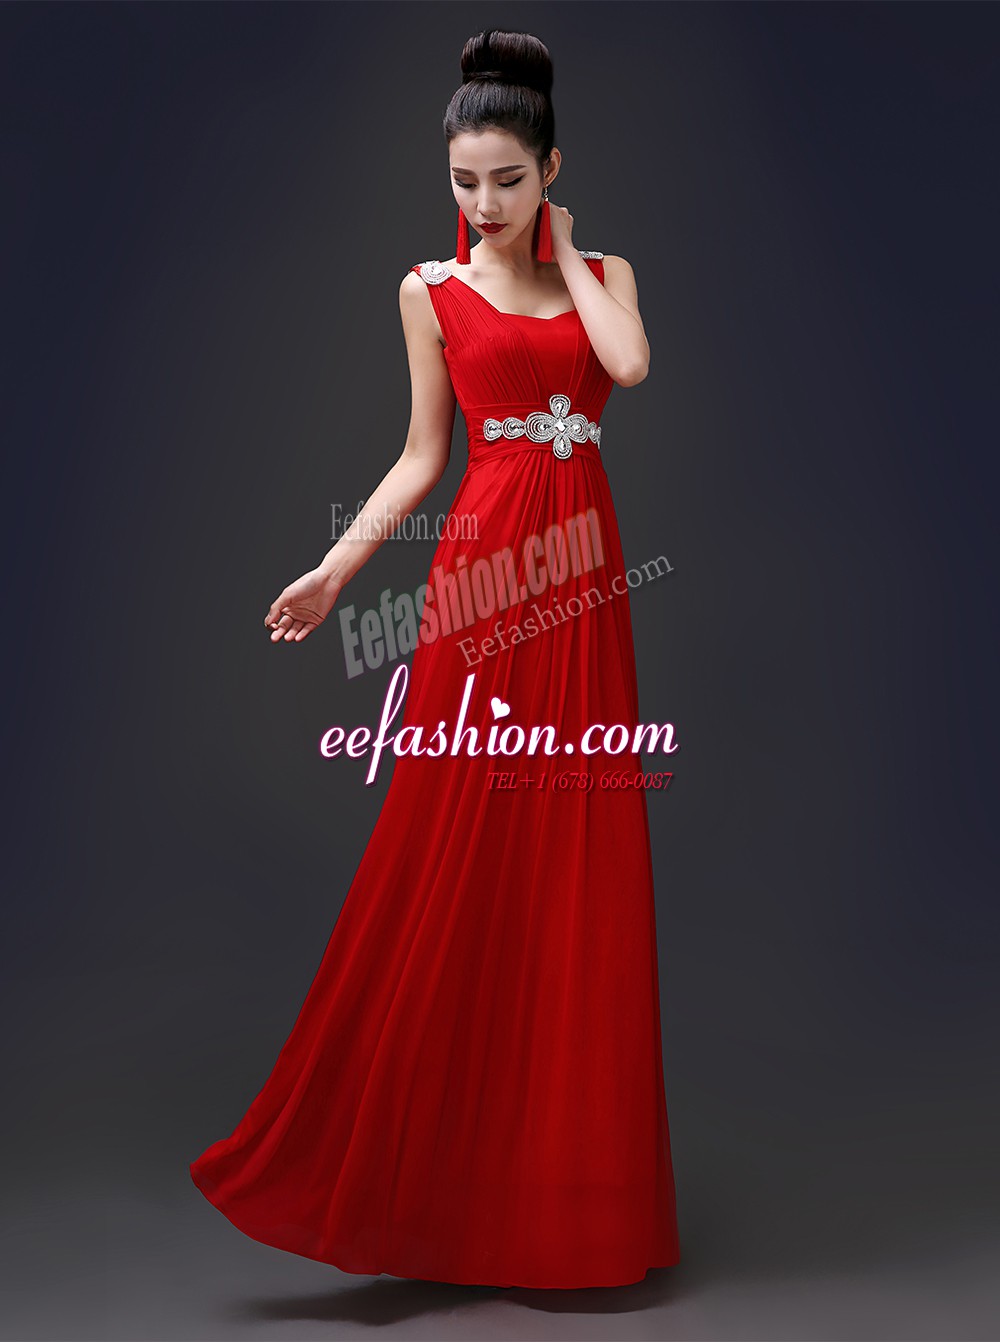  Square Red Chiffon Zipper Dress for Prom Sleeveless Floor Length Beading